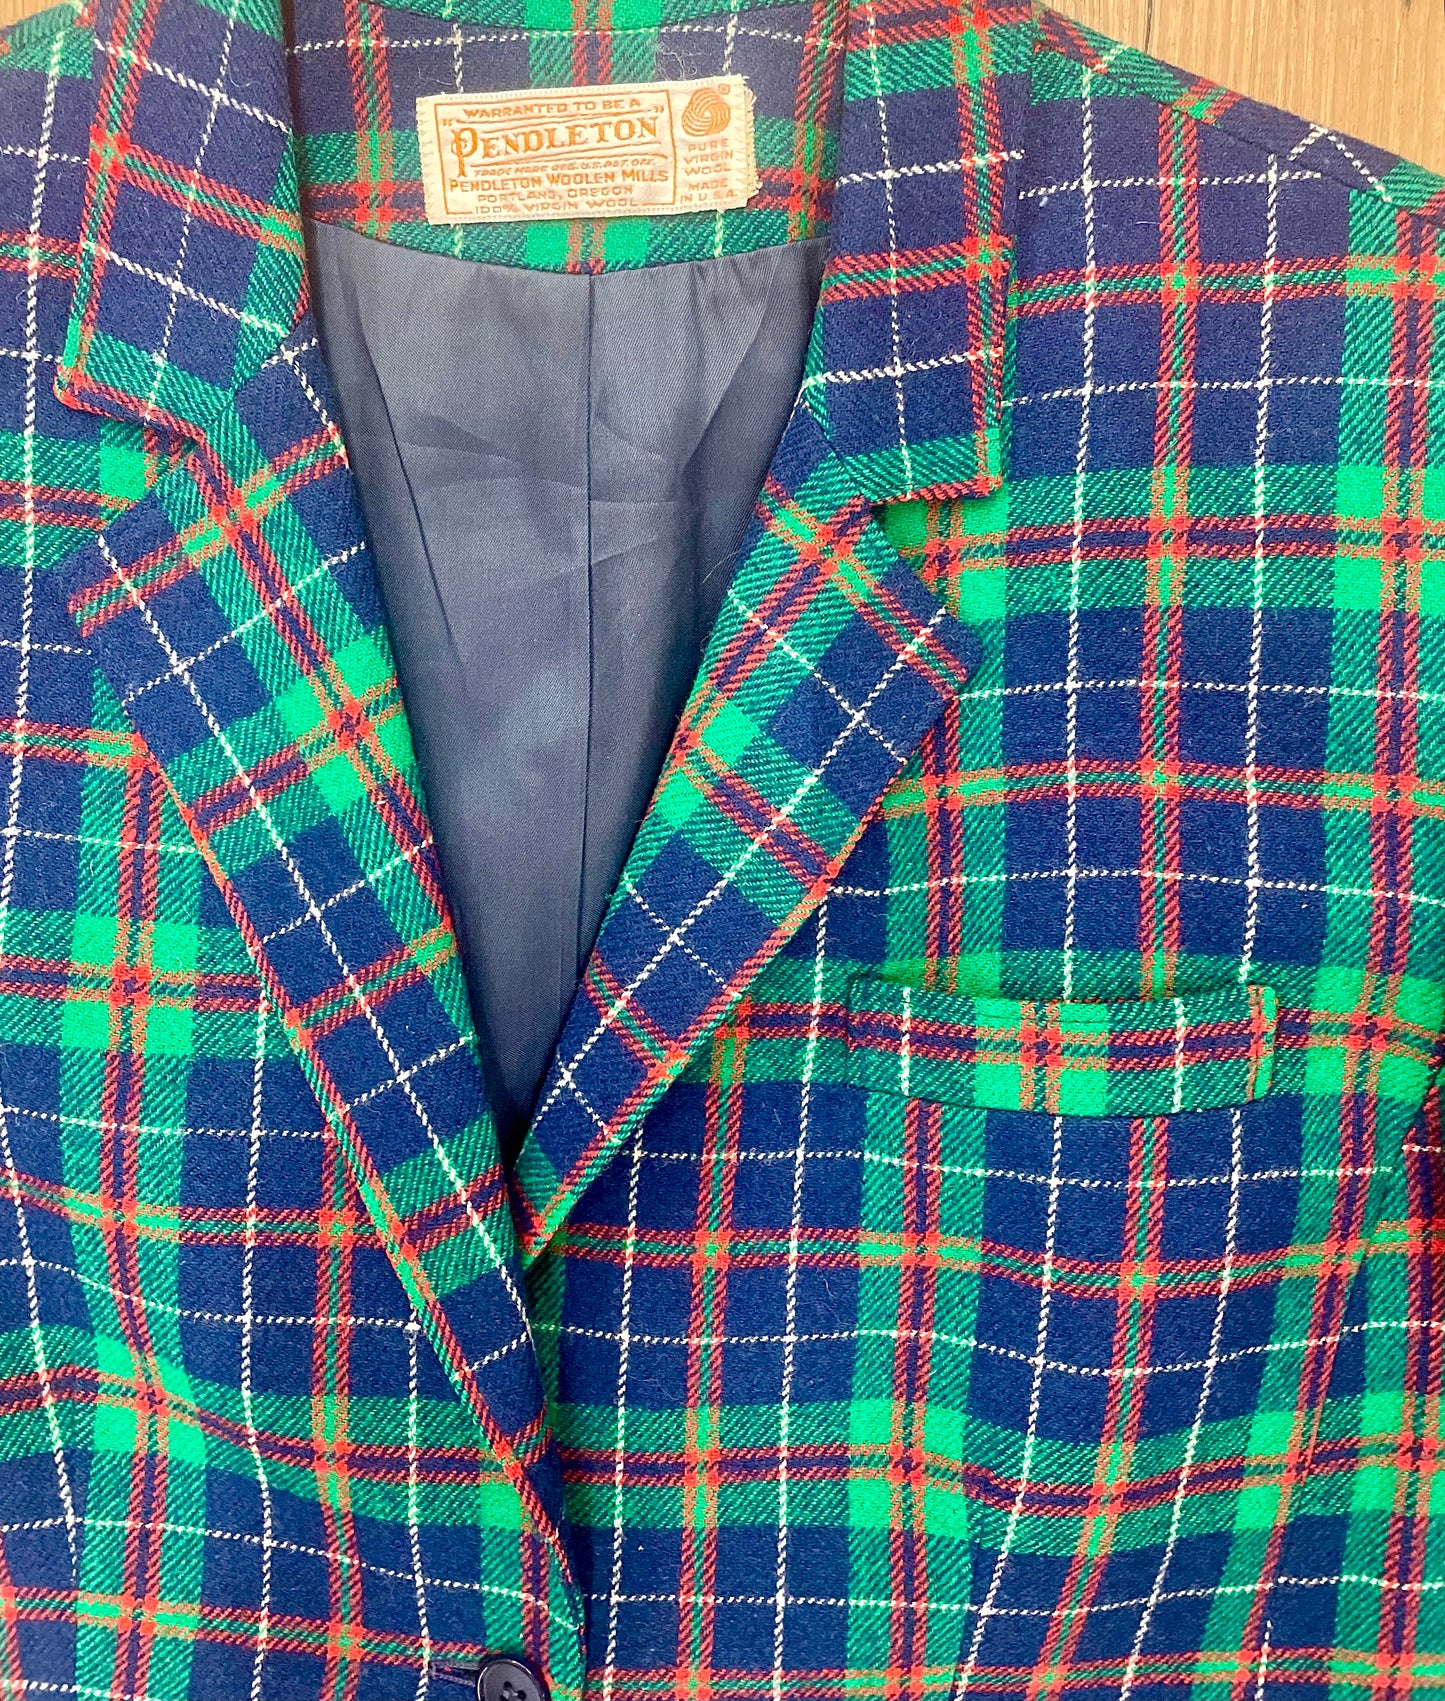 Pendleton All-Wool Plaid Blazer [1970s/80s, medium]